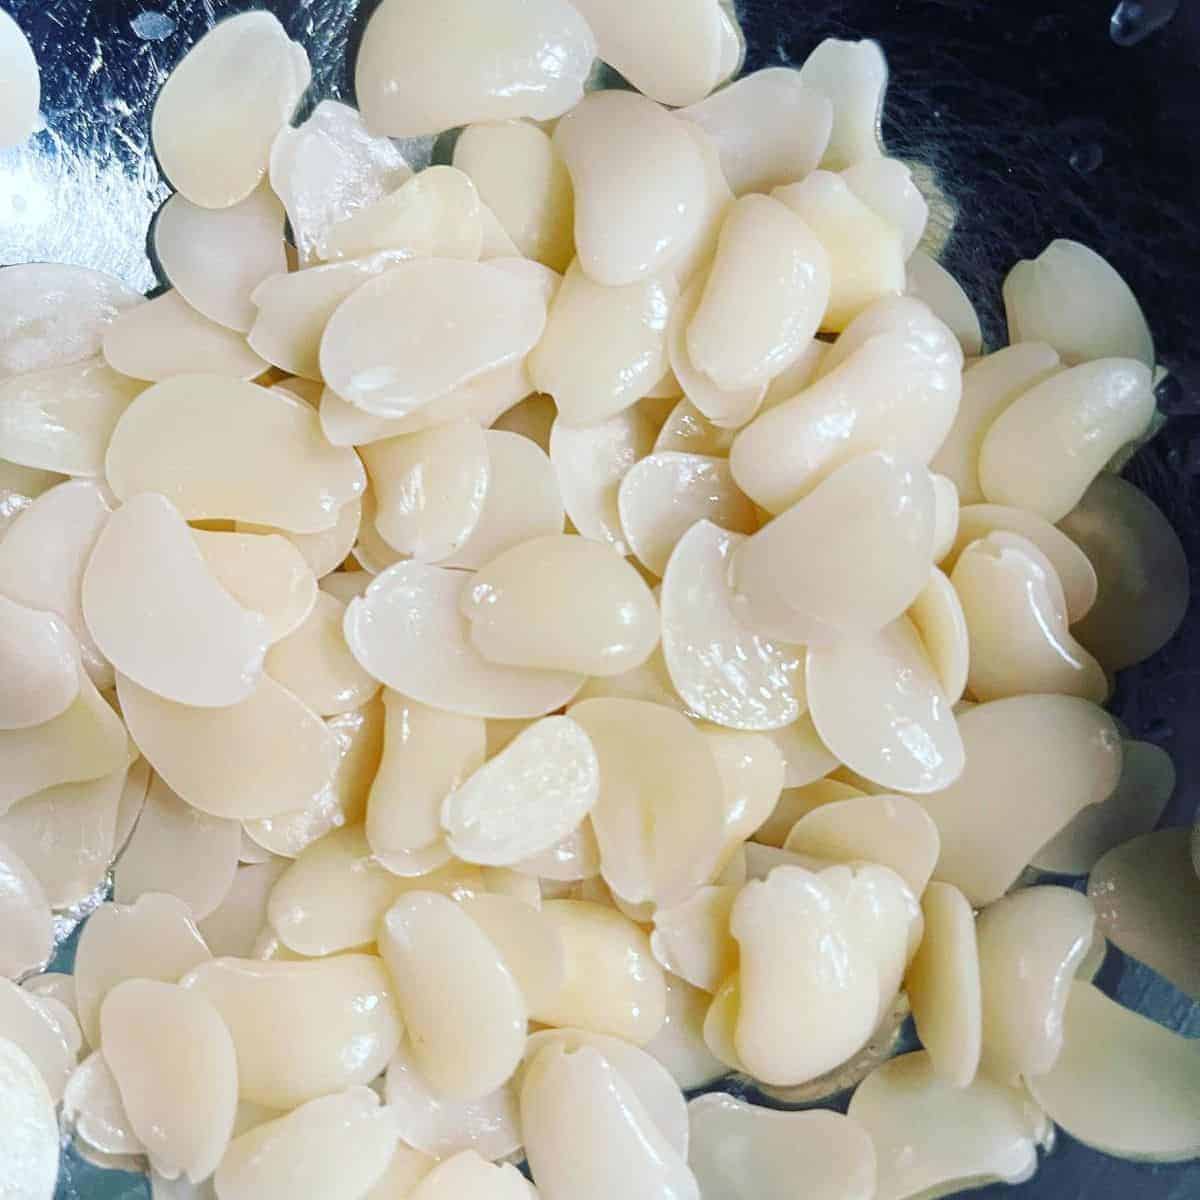 Shiroan white beans